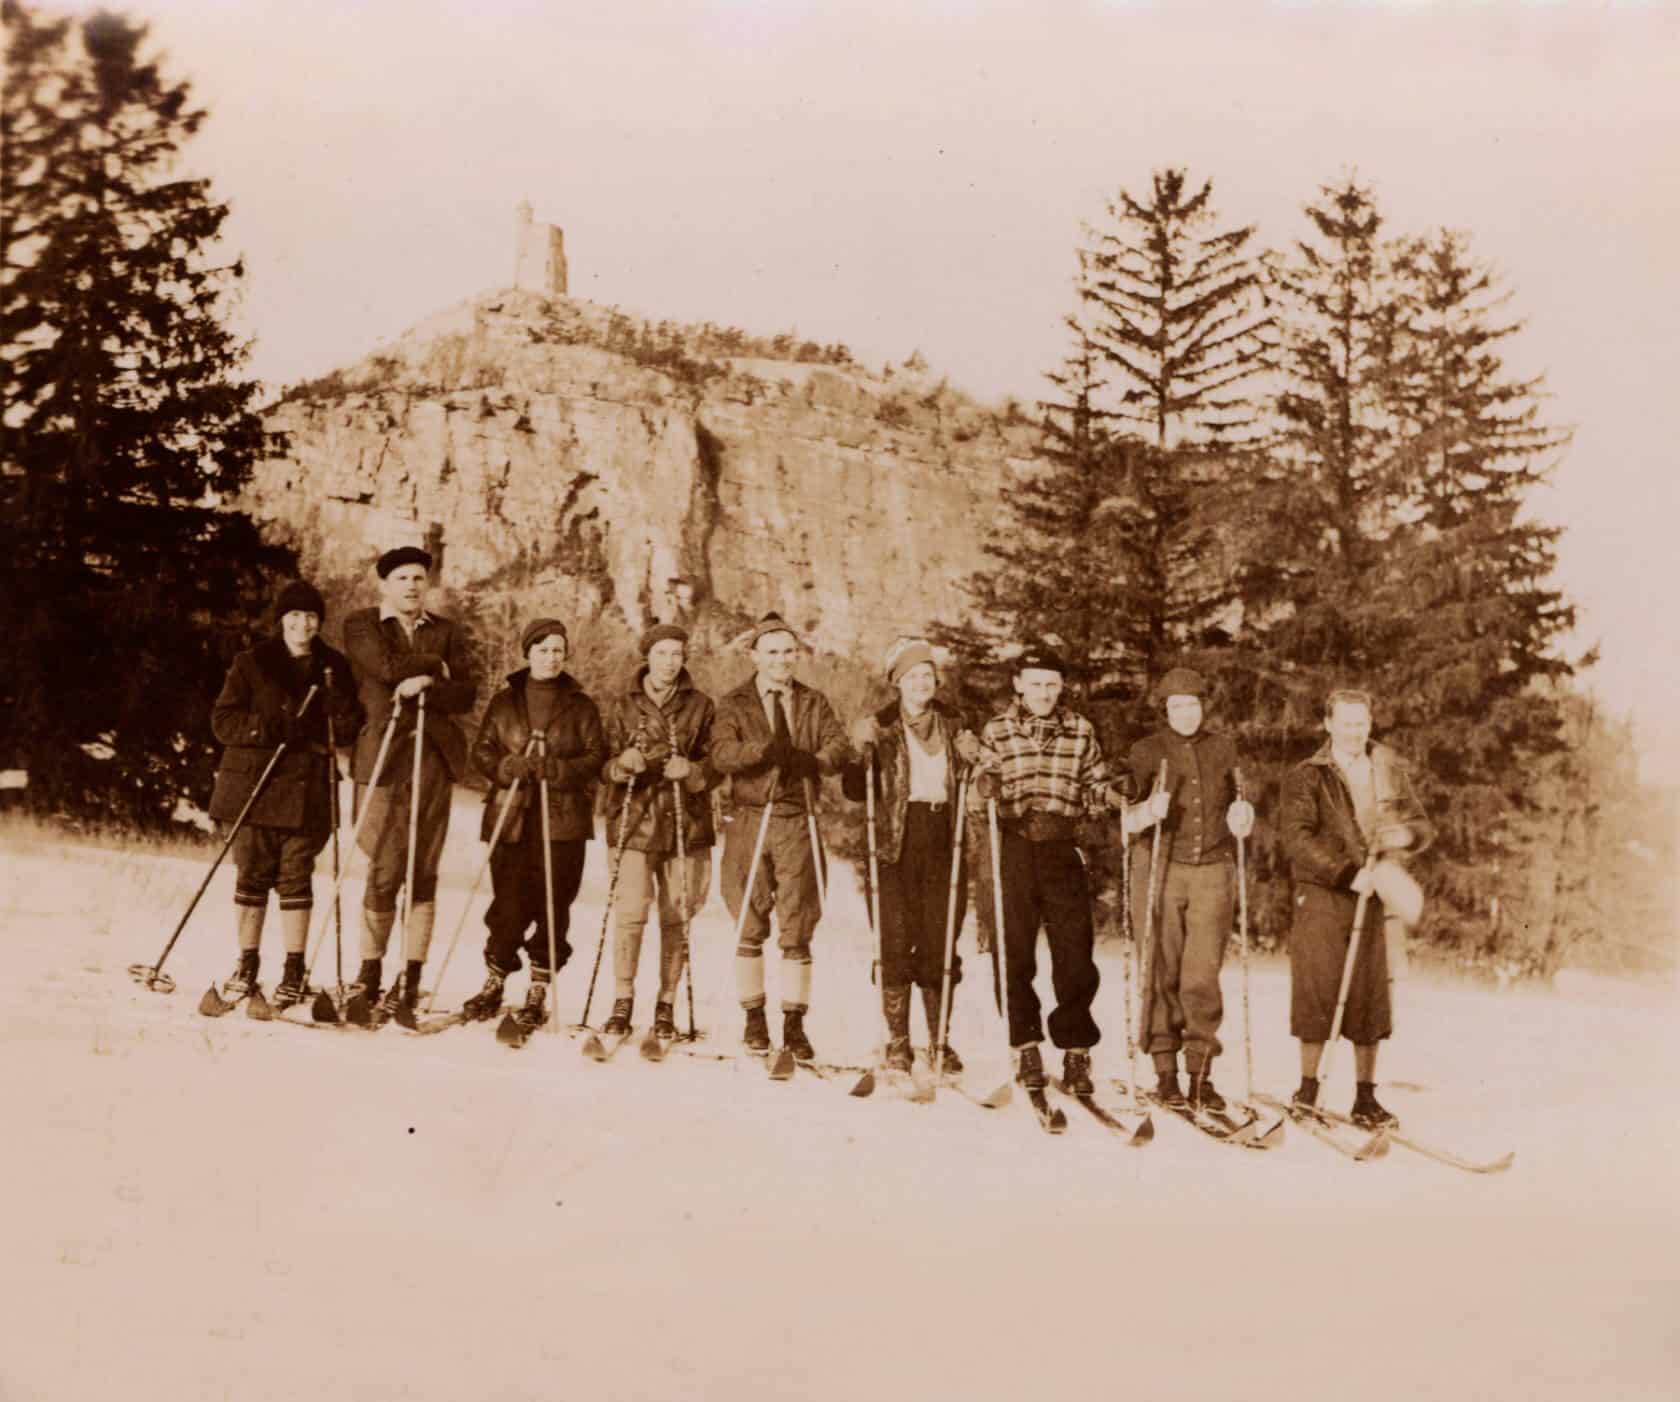 Members of the Adirondack Mountain Club, 1935